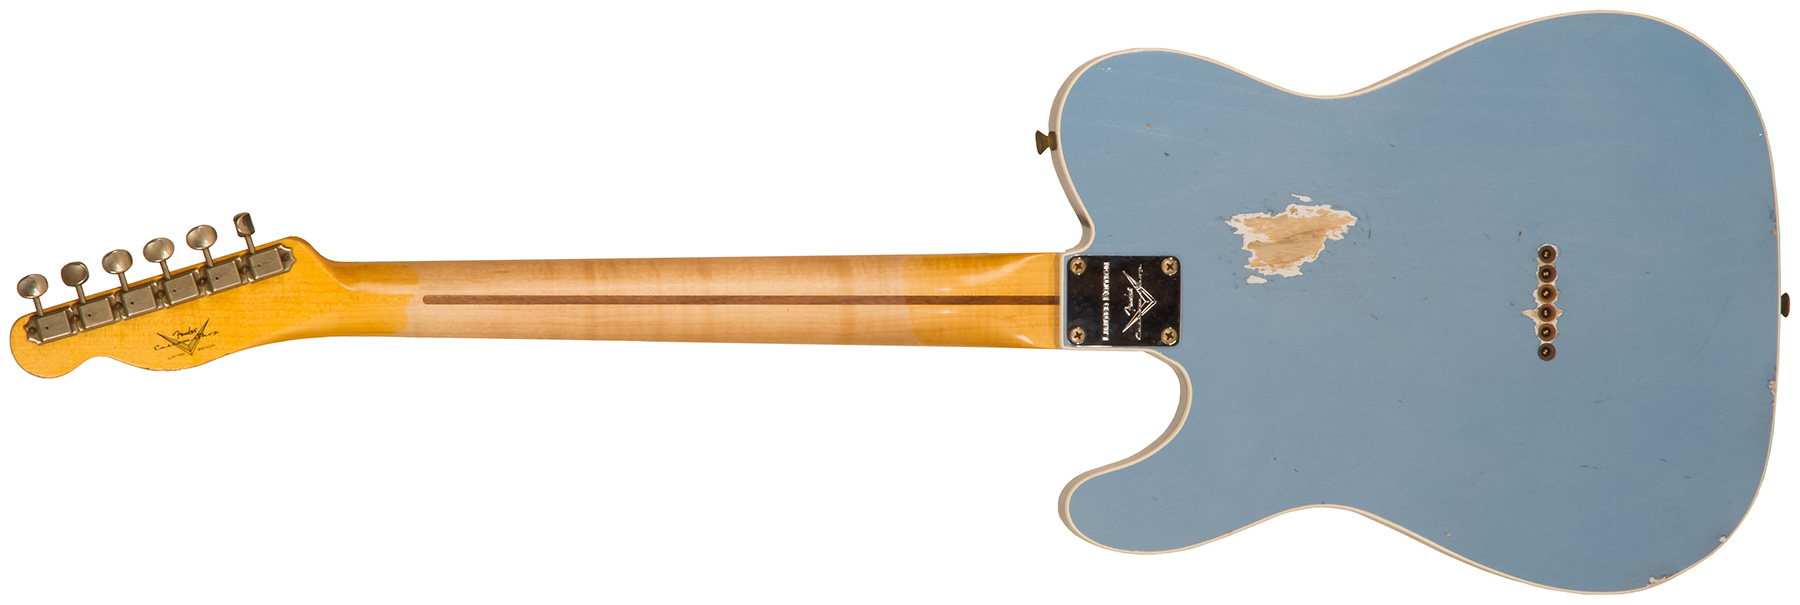 Fender Custom Shop Tele Custom Tomatillo 2s Ht Mn #r110879 - Relic Lake Placid Blue - Guitarra eléctrica con forma de tel - Variation 1